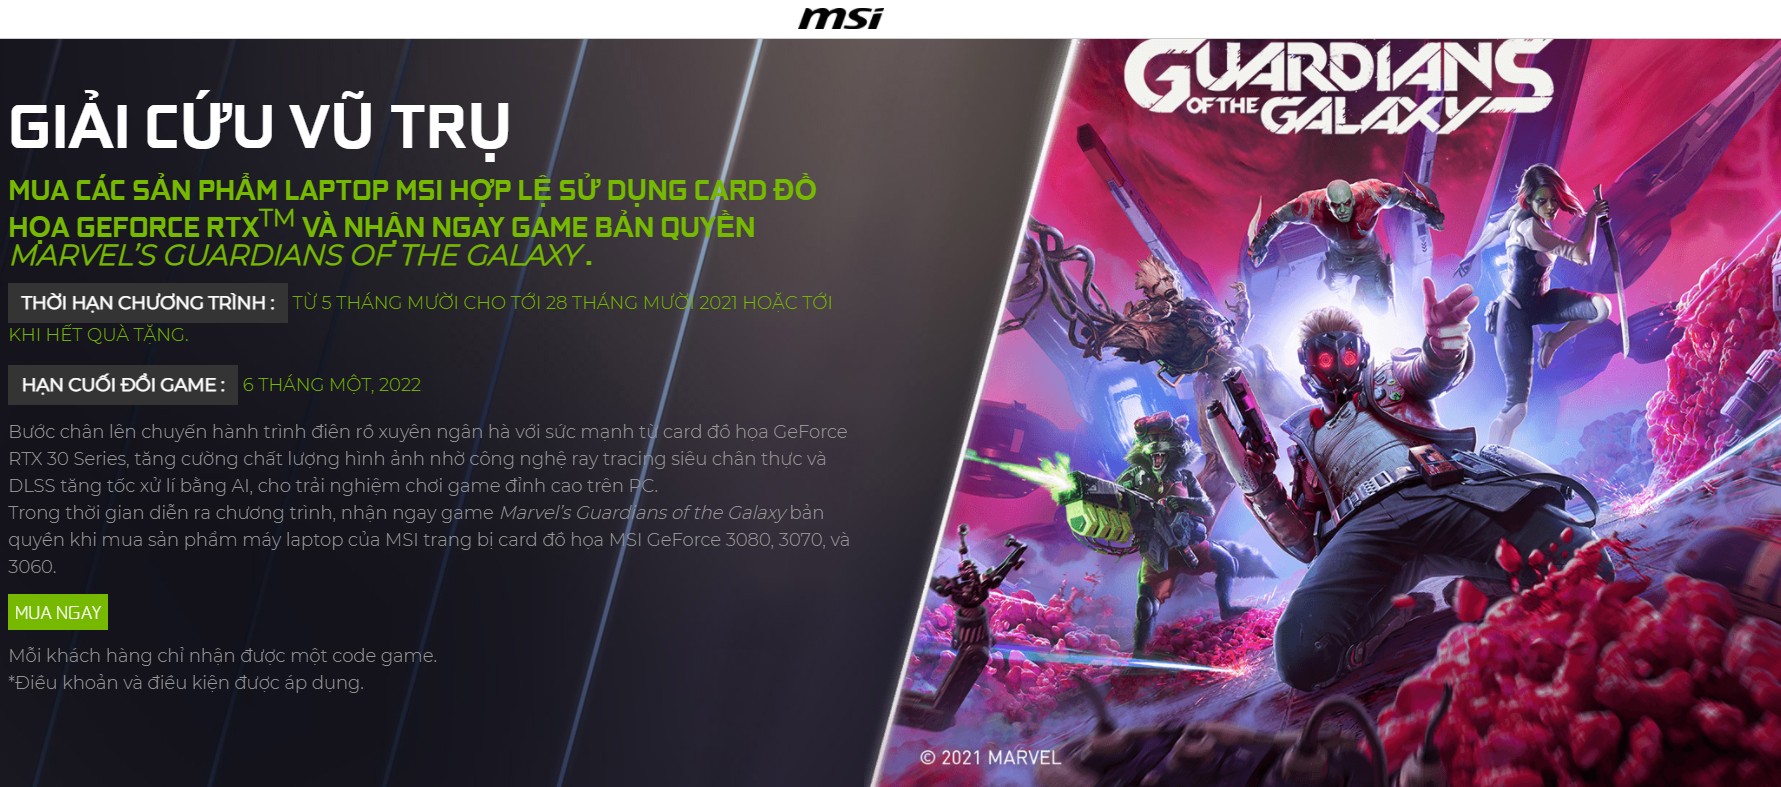 Mua laptop MSI nhận code game Marvel’s Guardians of Galaxy